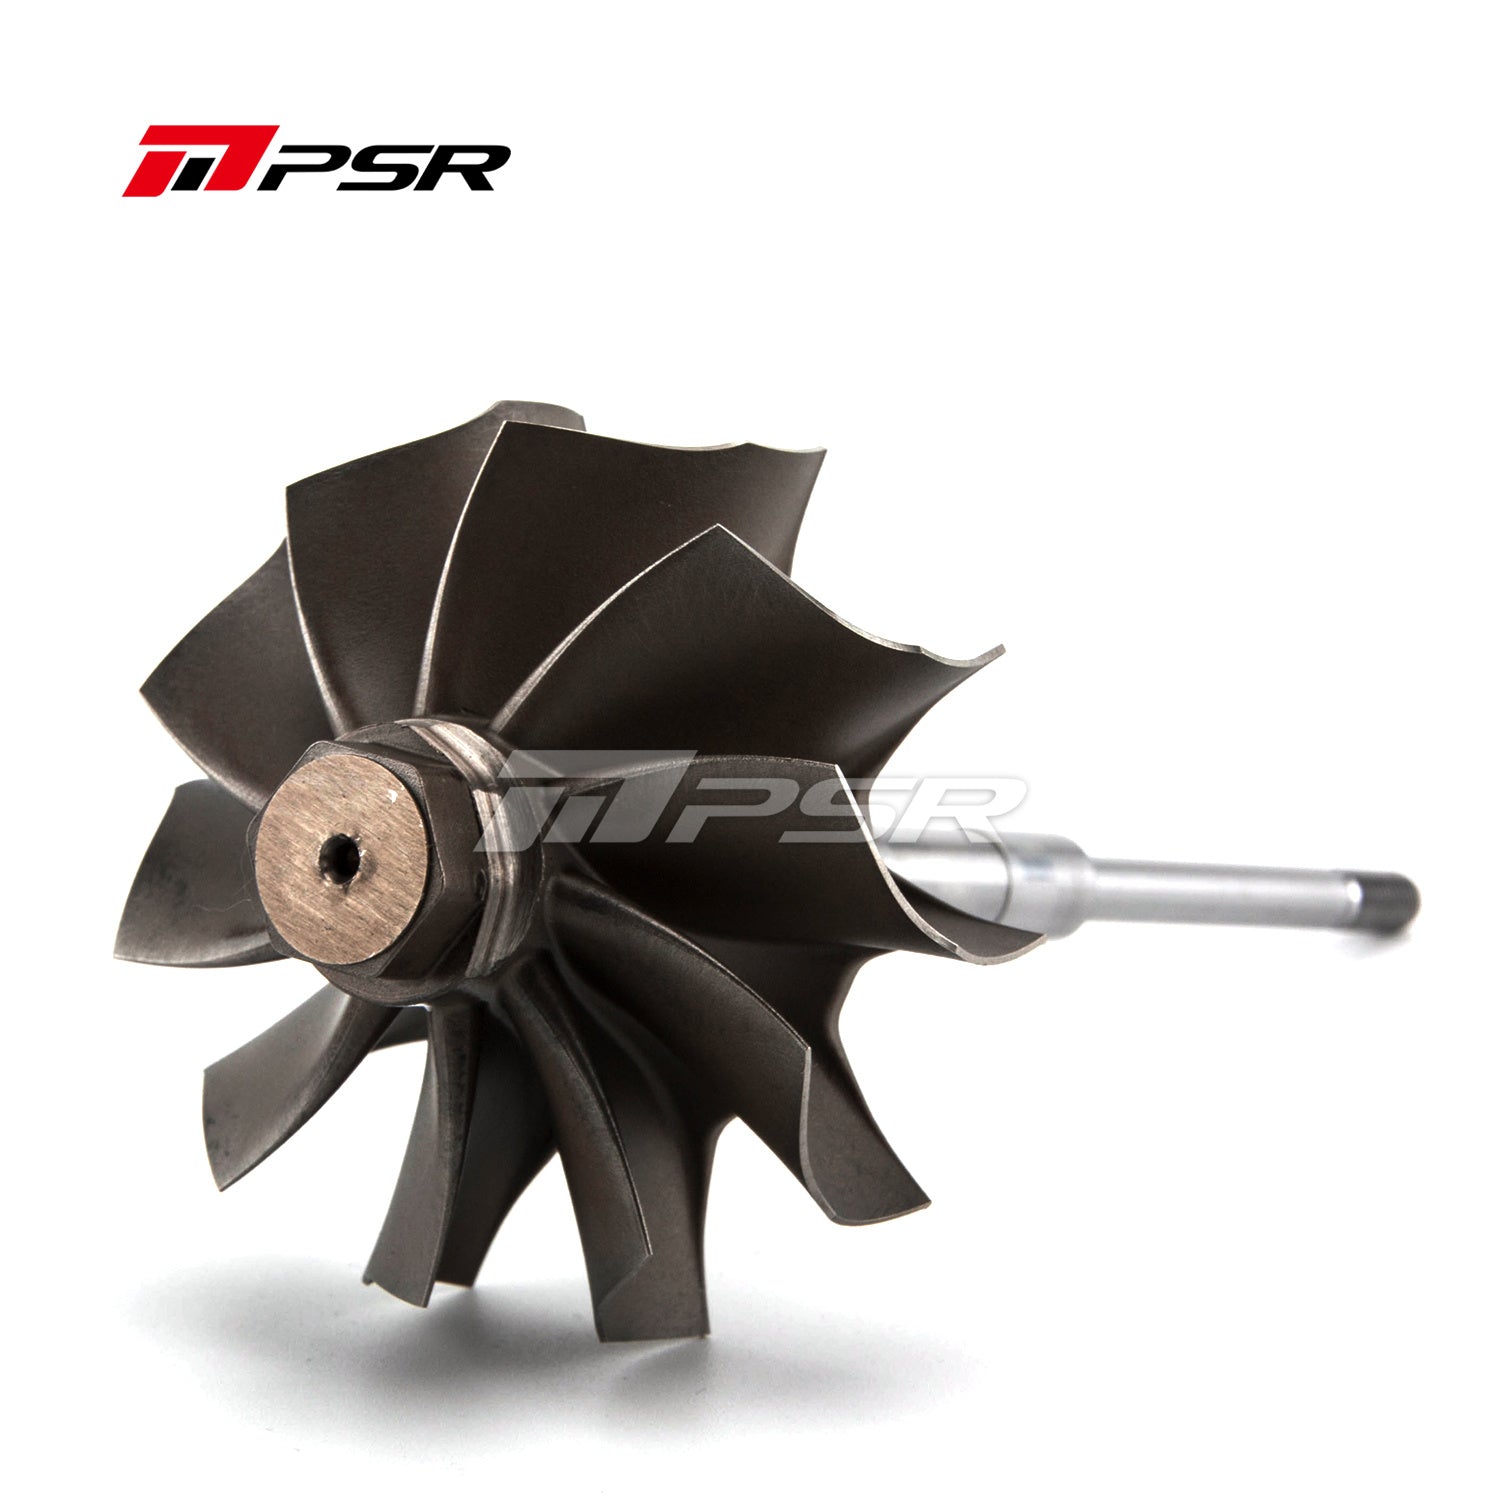 PSR Turbo Parts for GTP38 Turbo Charger Billet Compressor Wheel Rebuild Kit Turbine Wheel DIY Kit